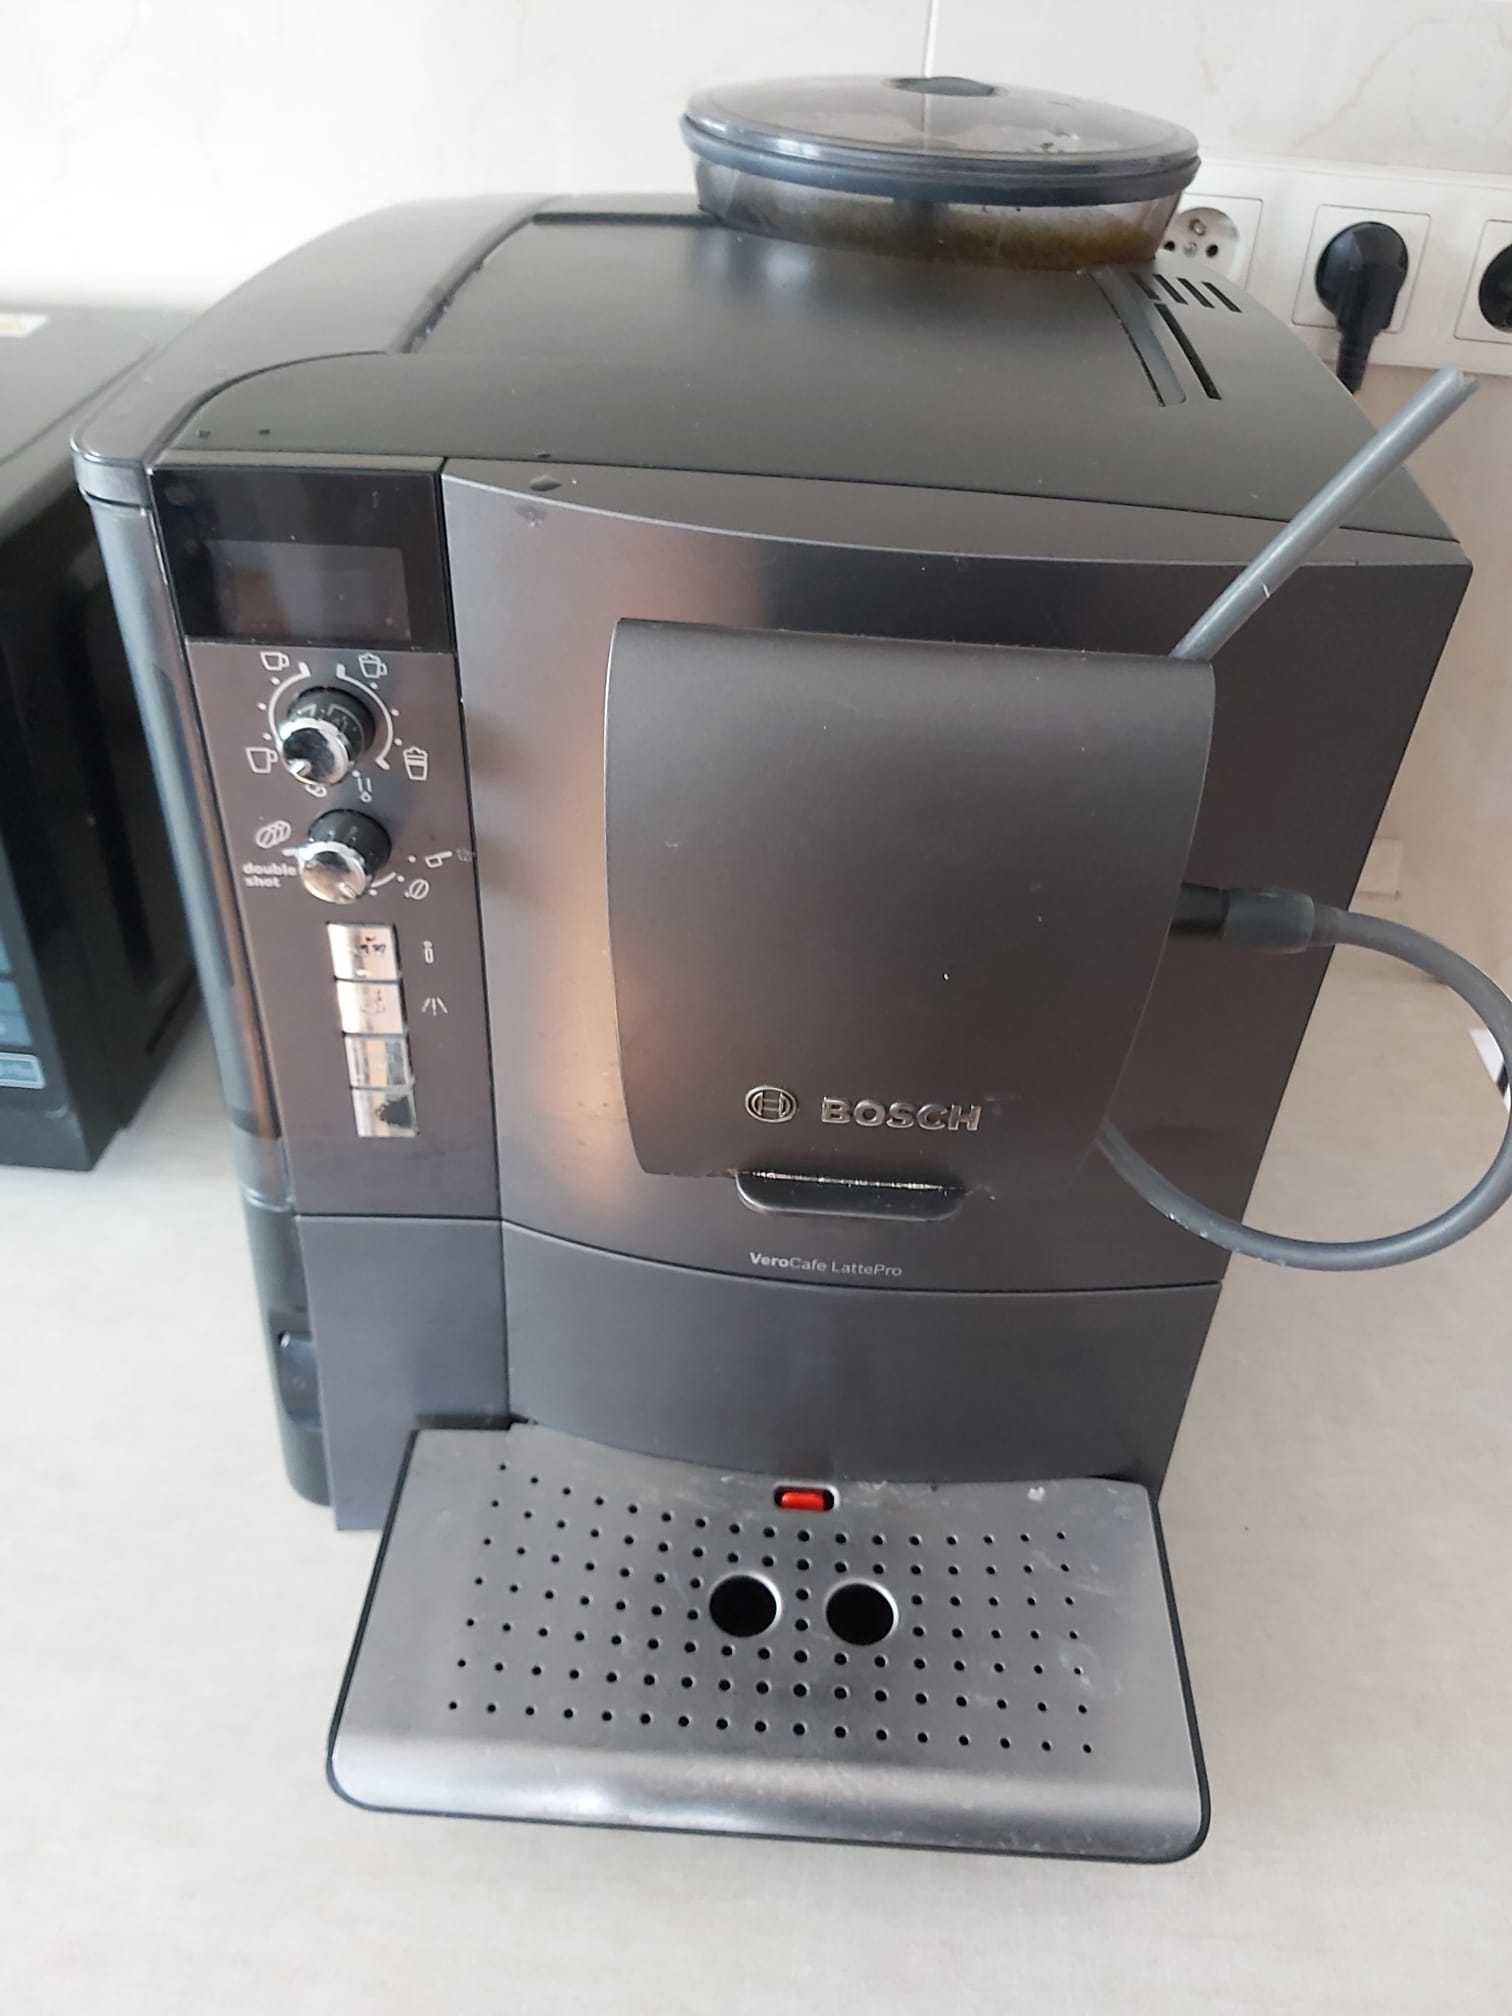 ekspres ciśnieniowy Bosch VeroCafe LattePro